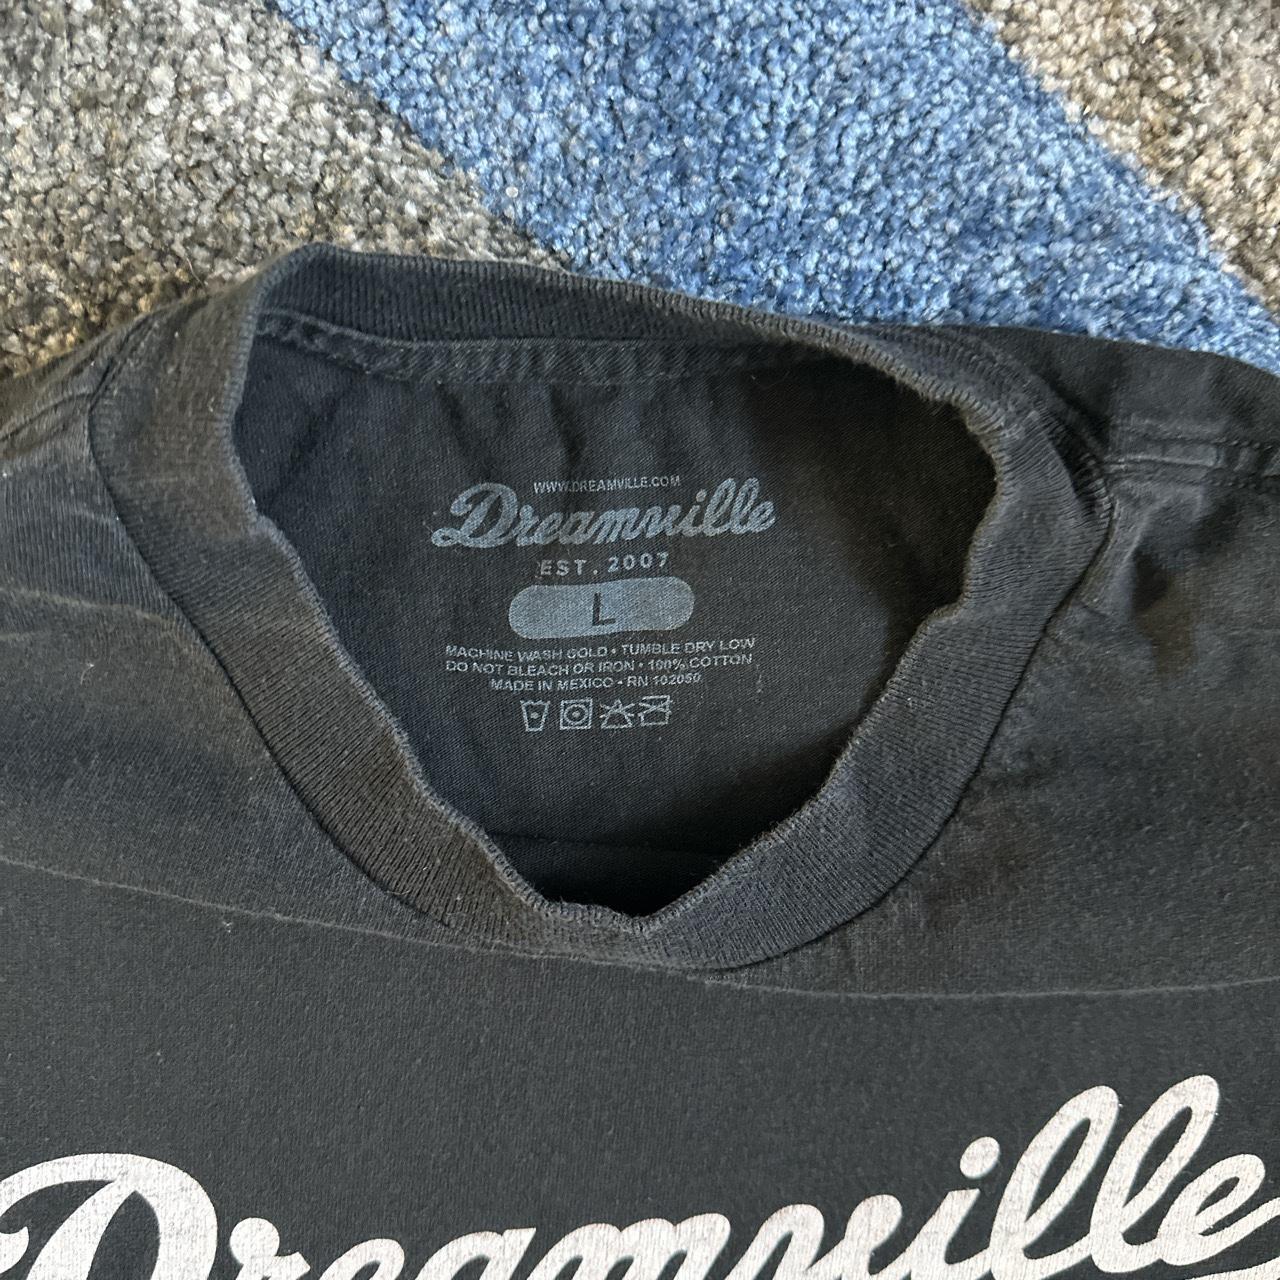 J Cole Dreamville shirt. Great condition. No flaws. - Depop